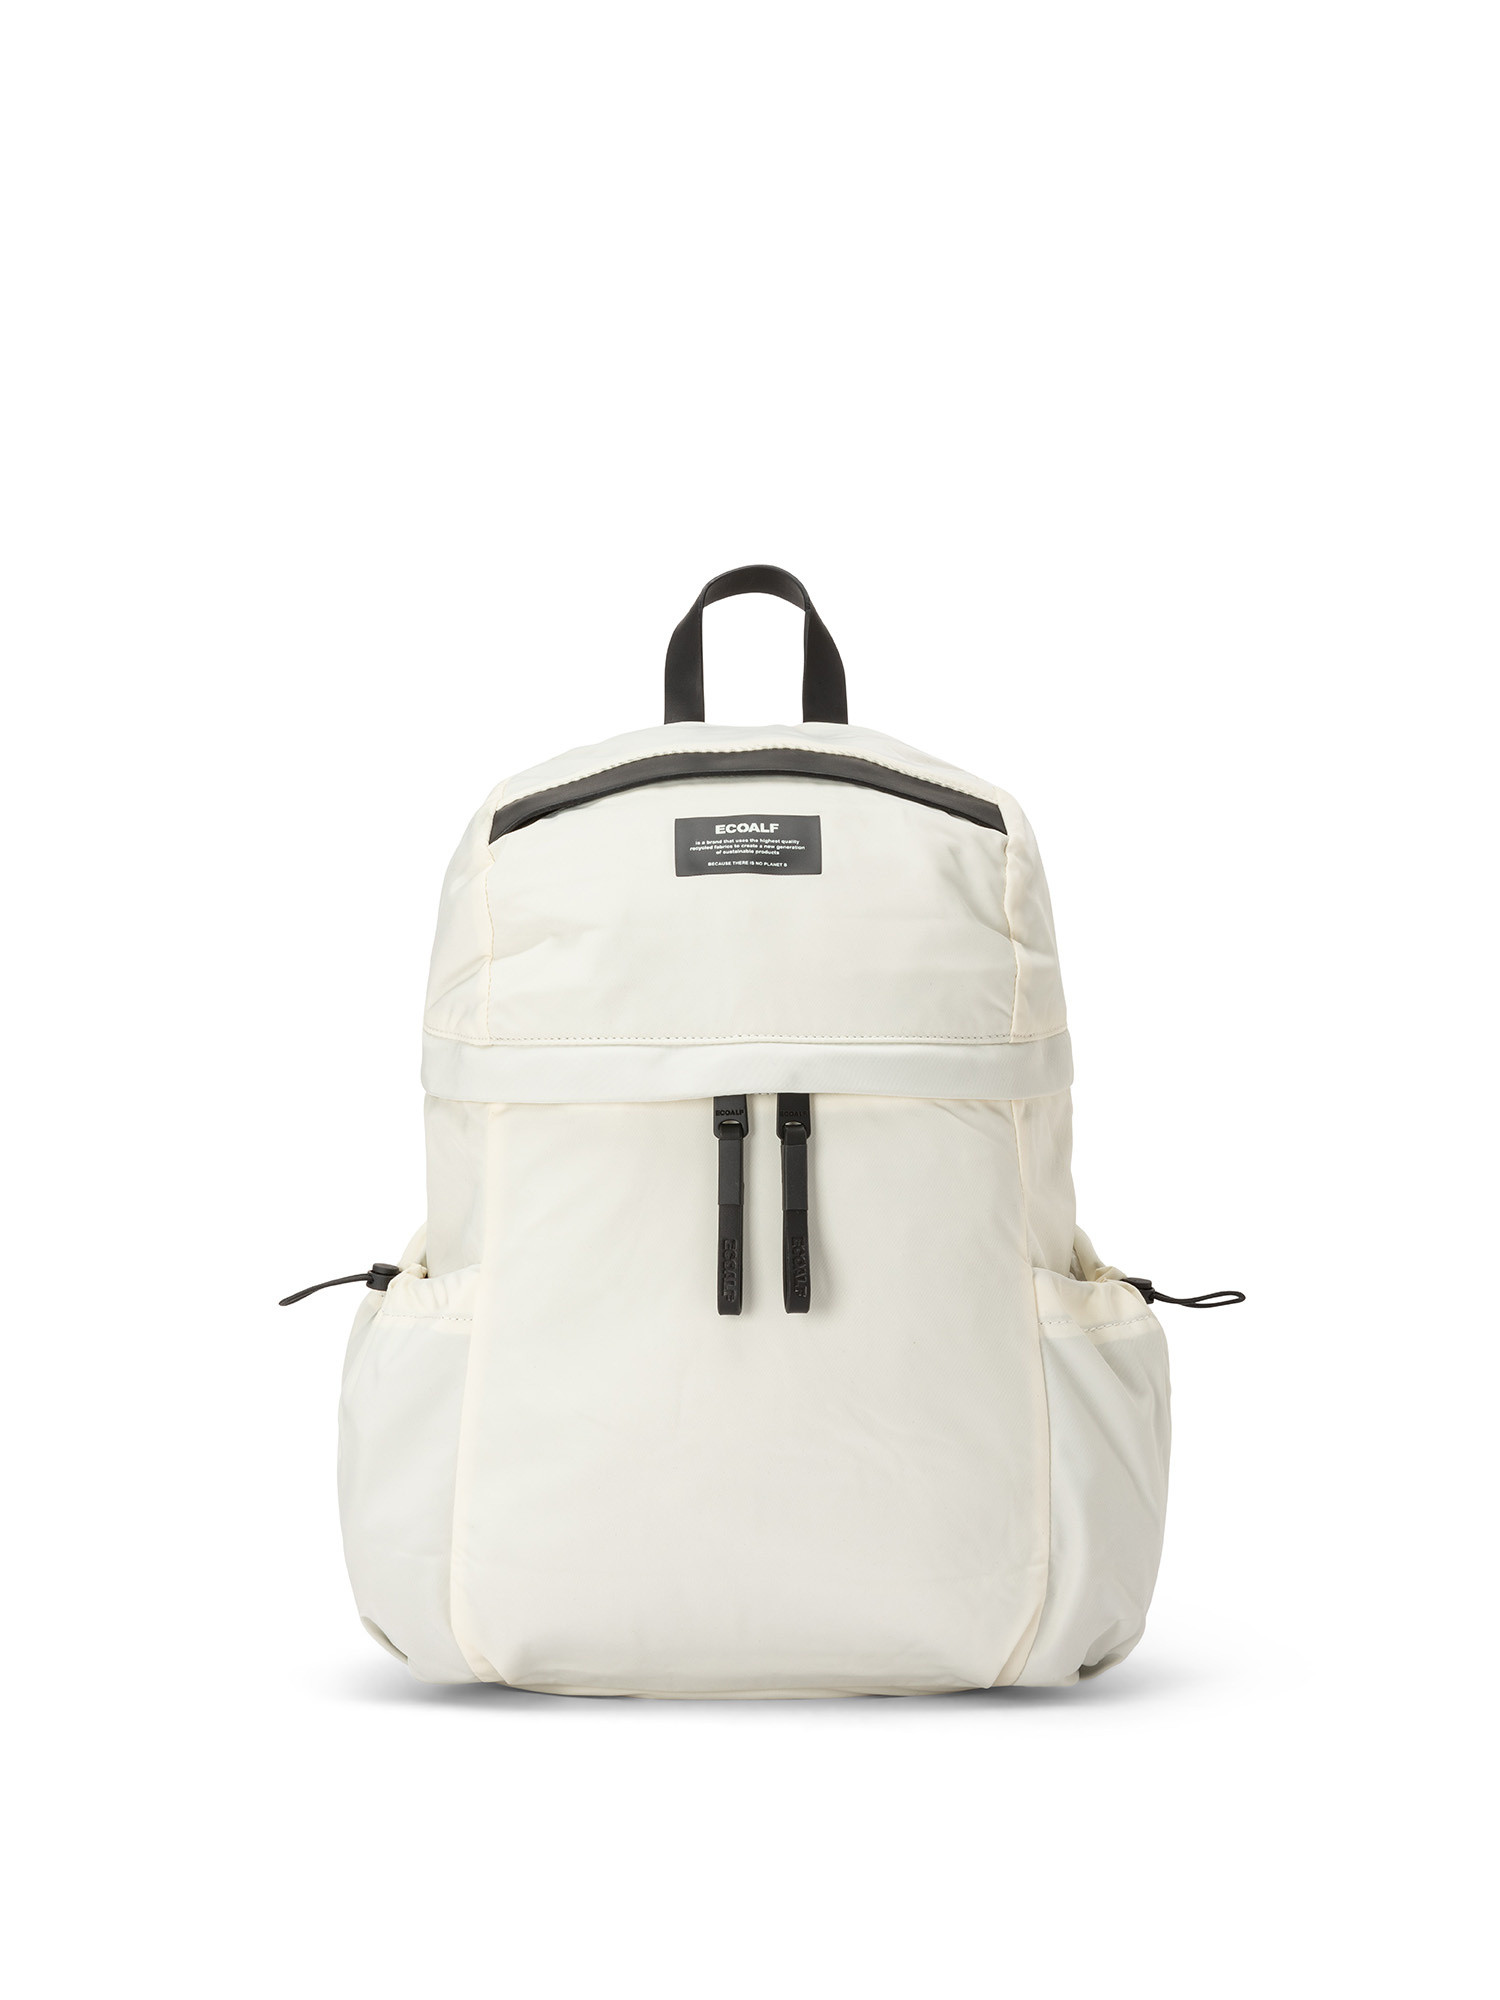 Ecoalf - Waterproof Mom Backpack, White, large image number 0